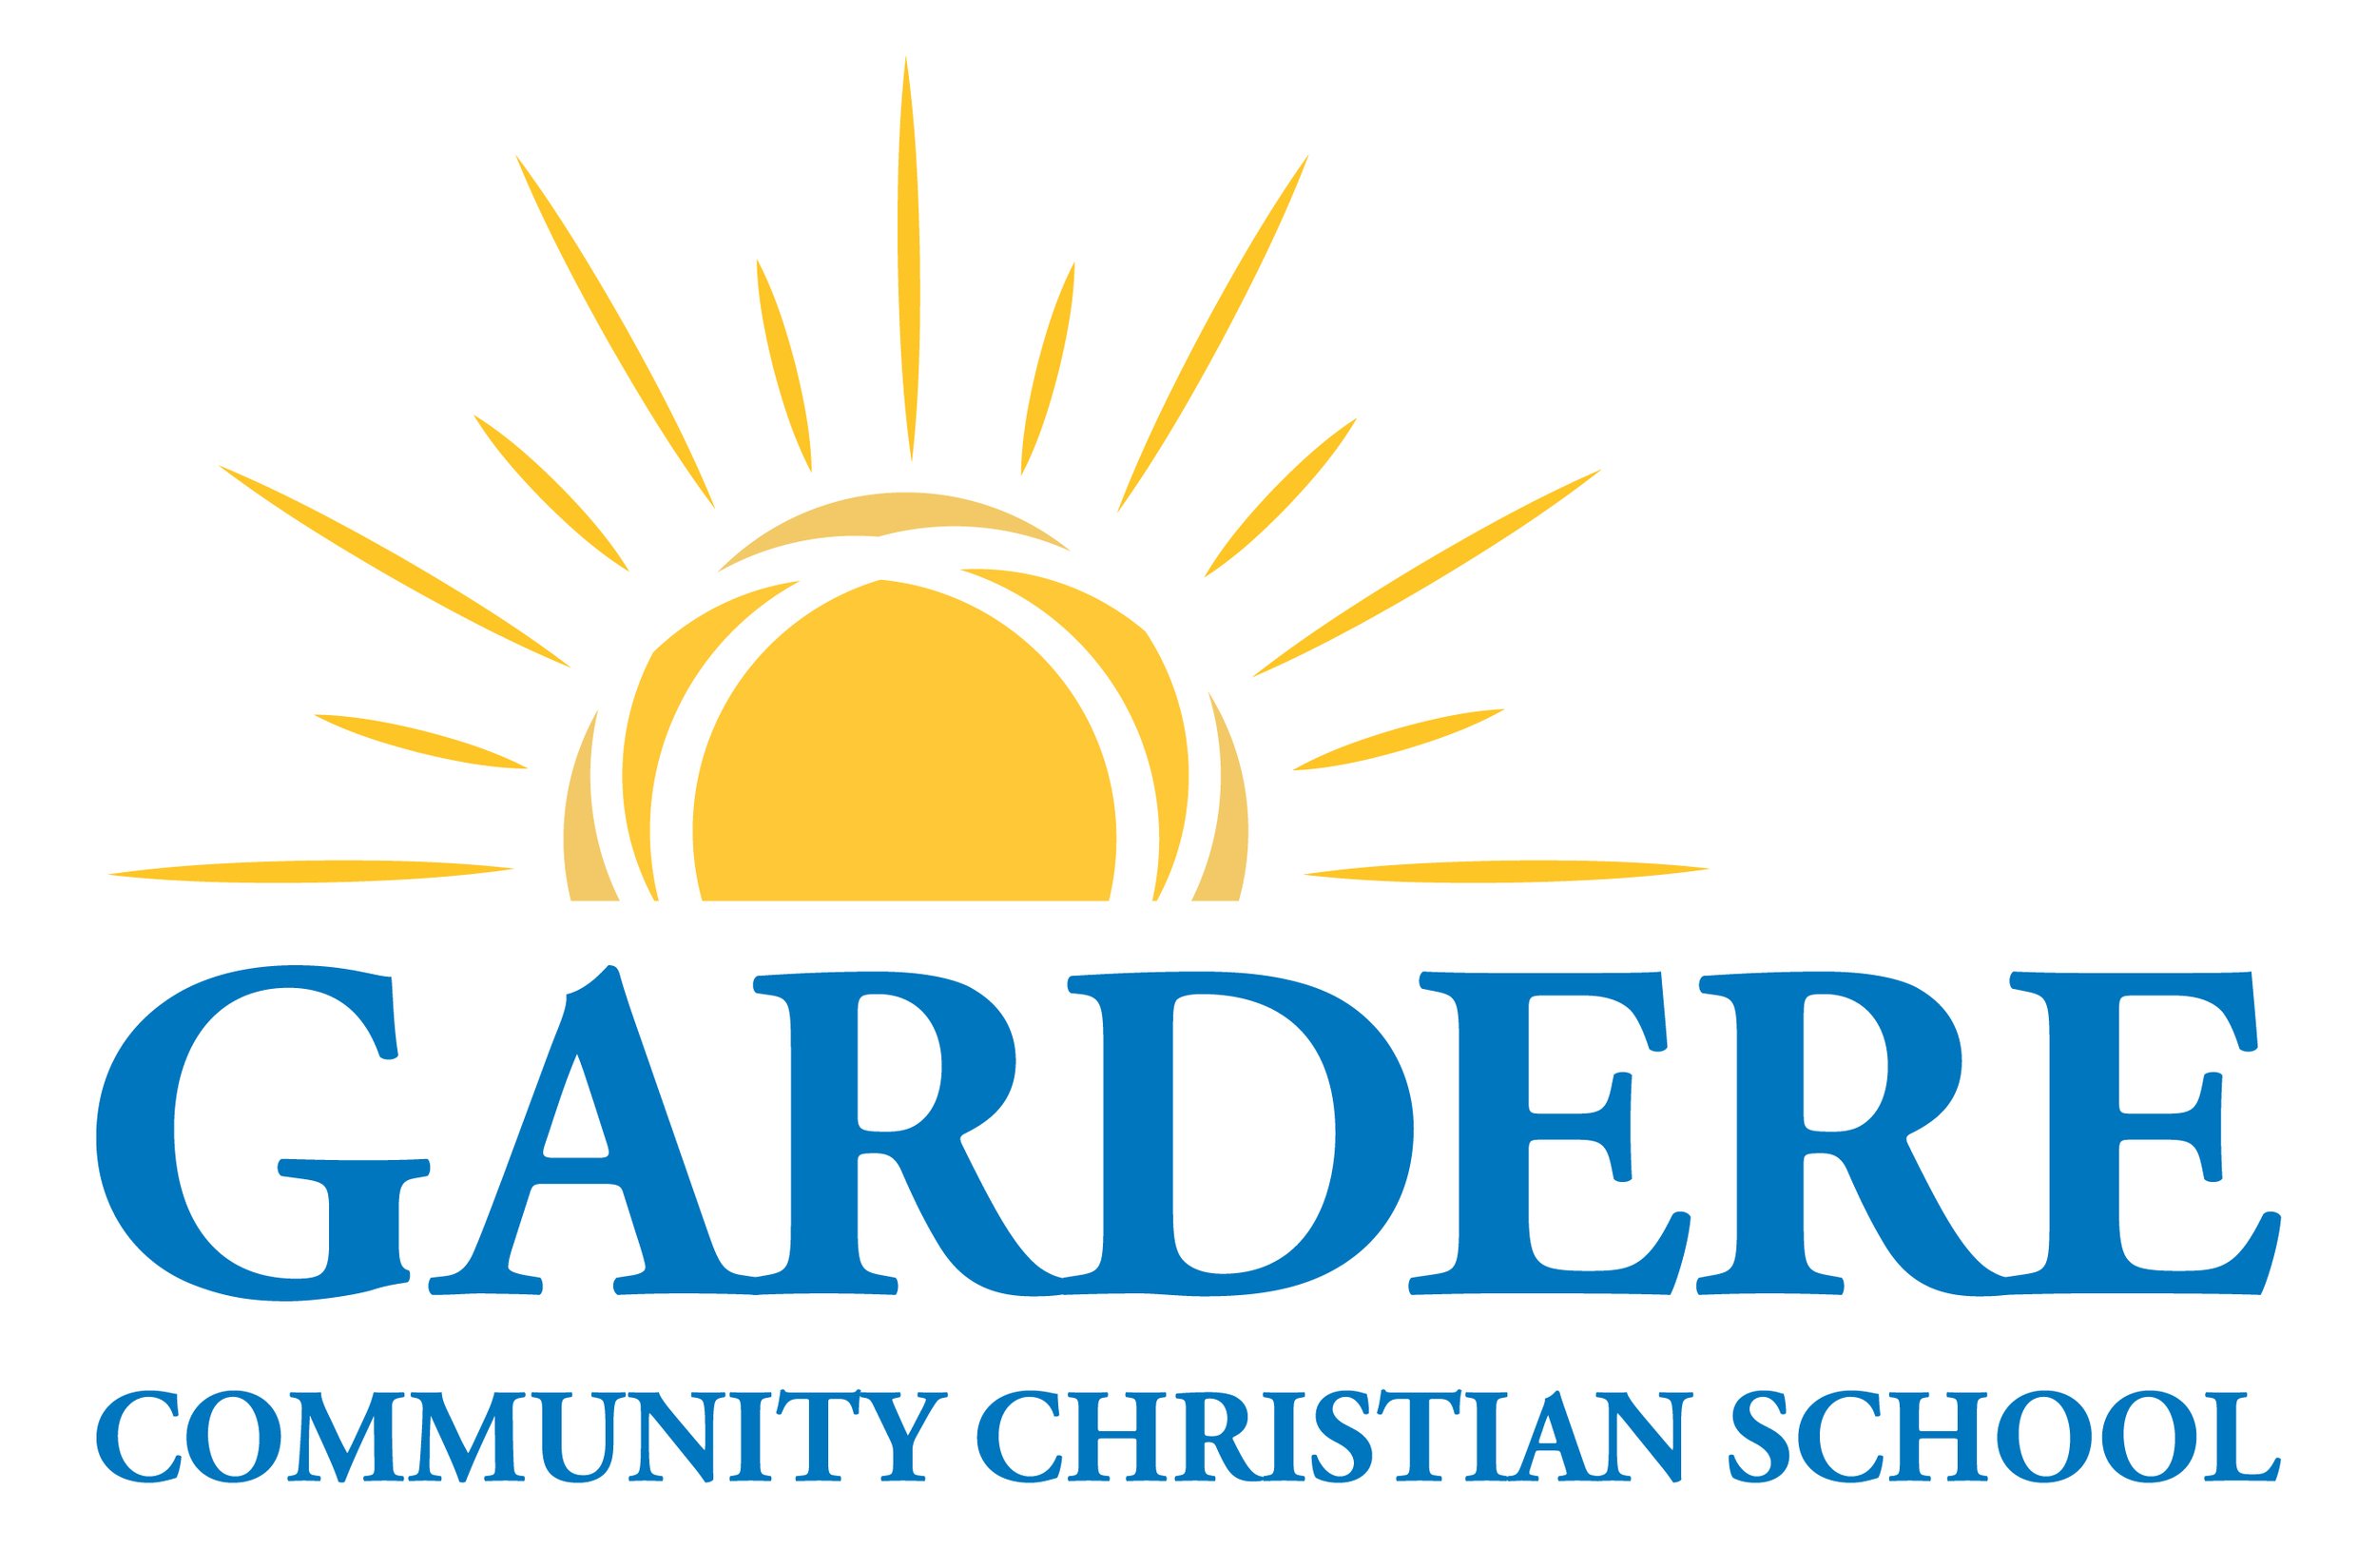 Gardere Community Christian School